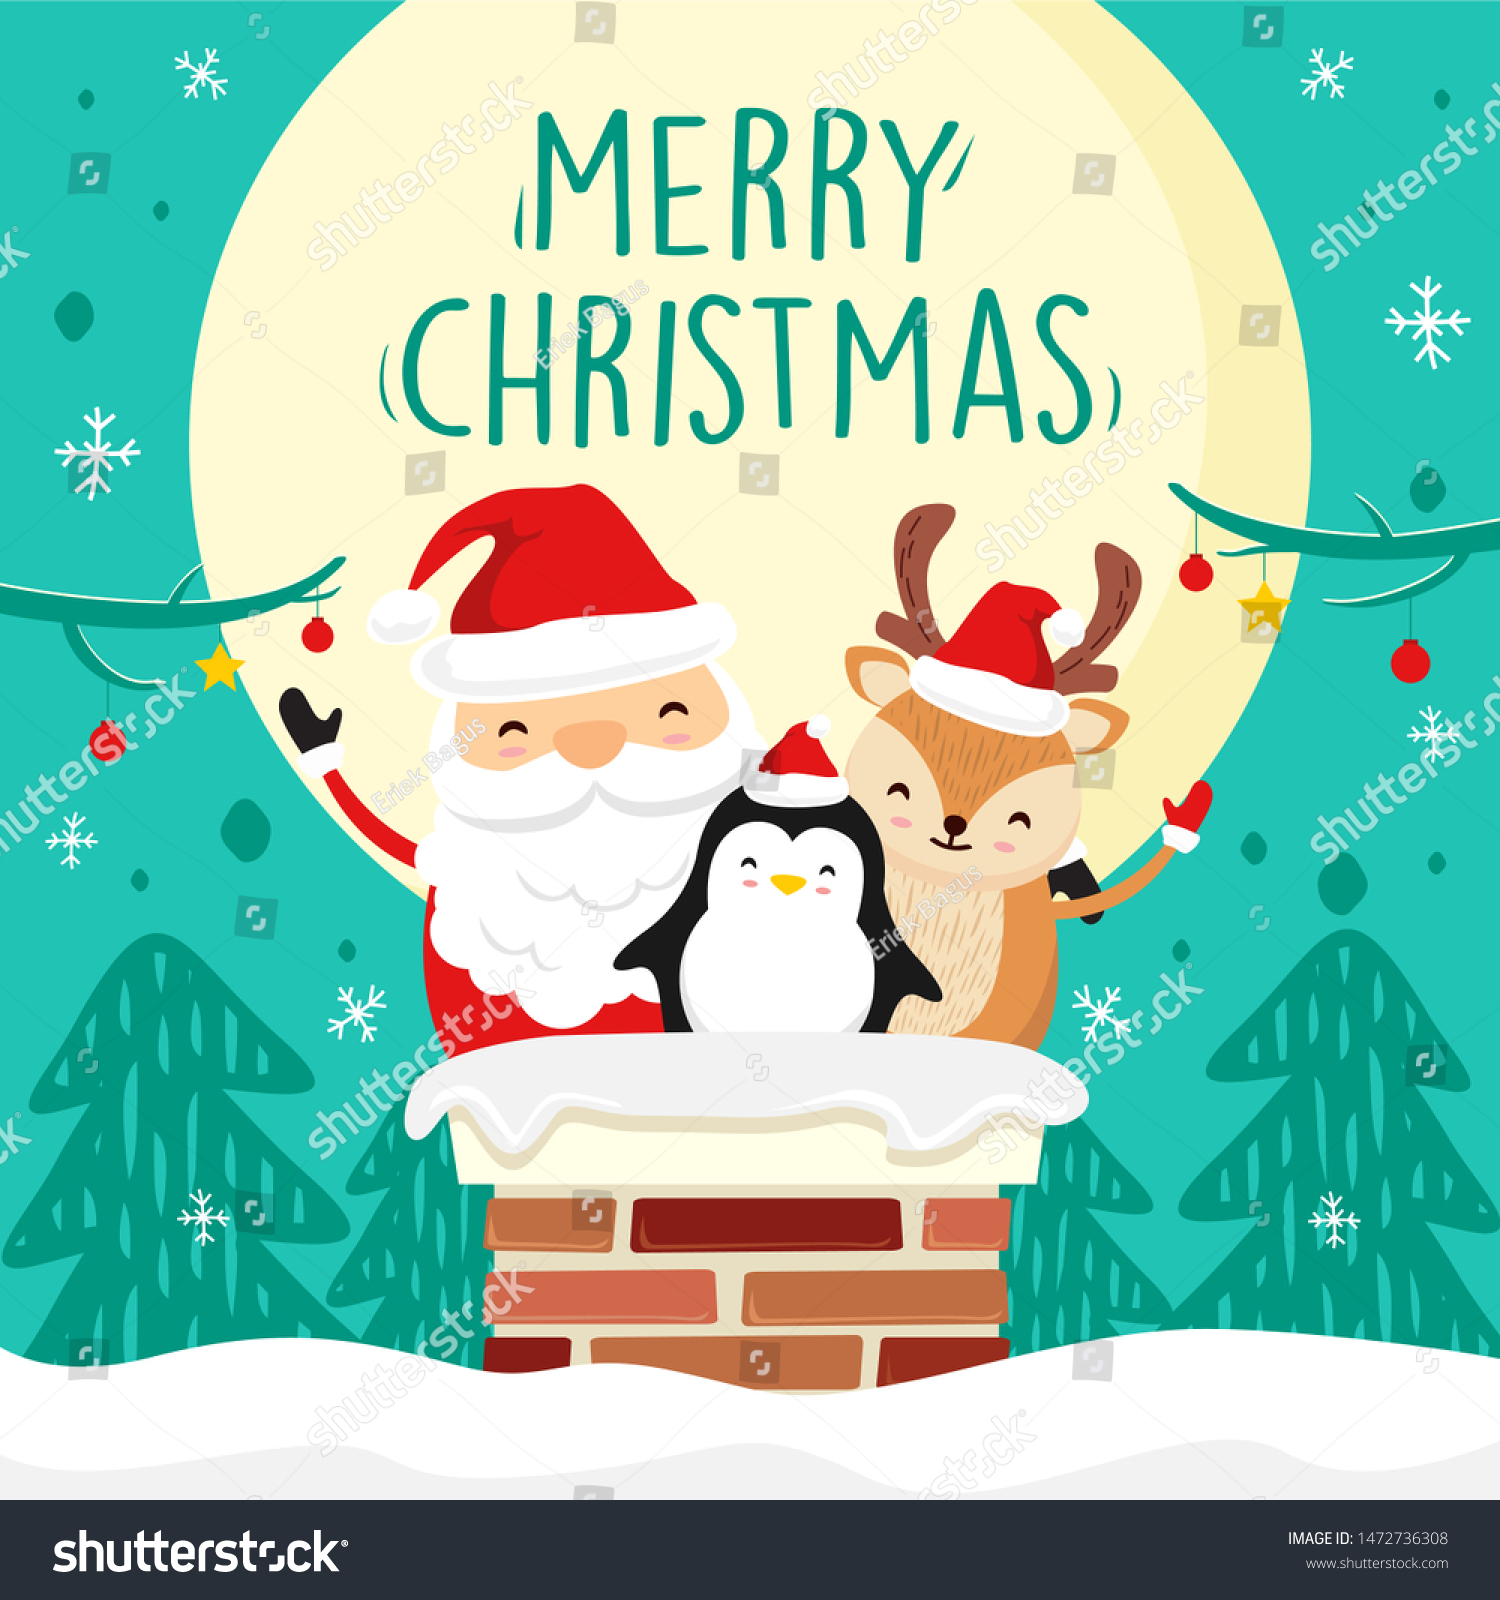 Merry christmas cartoon vector graphic illustration stock vector royalty free